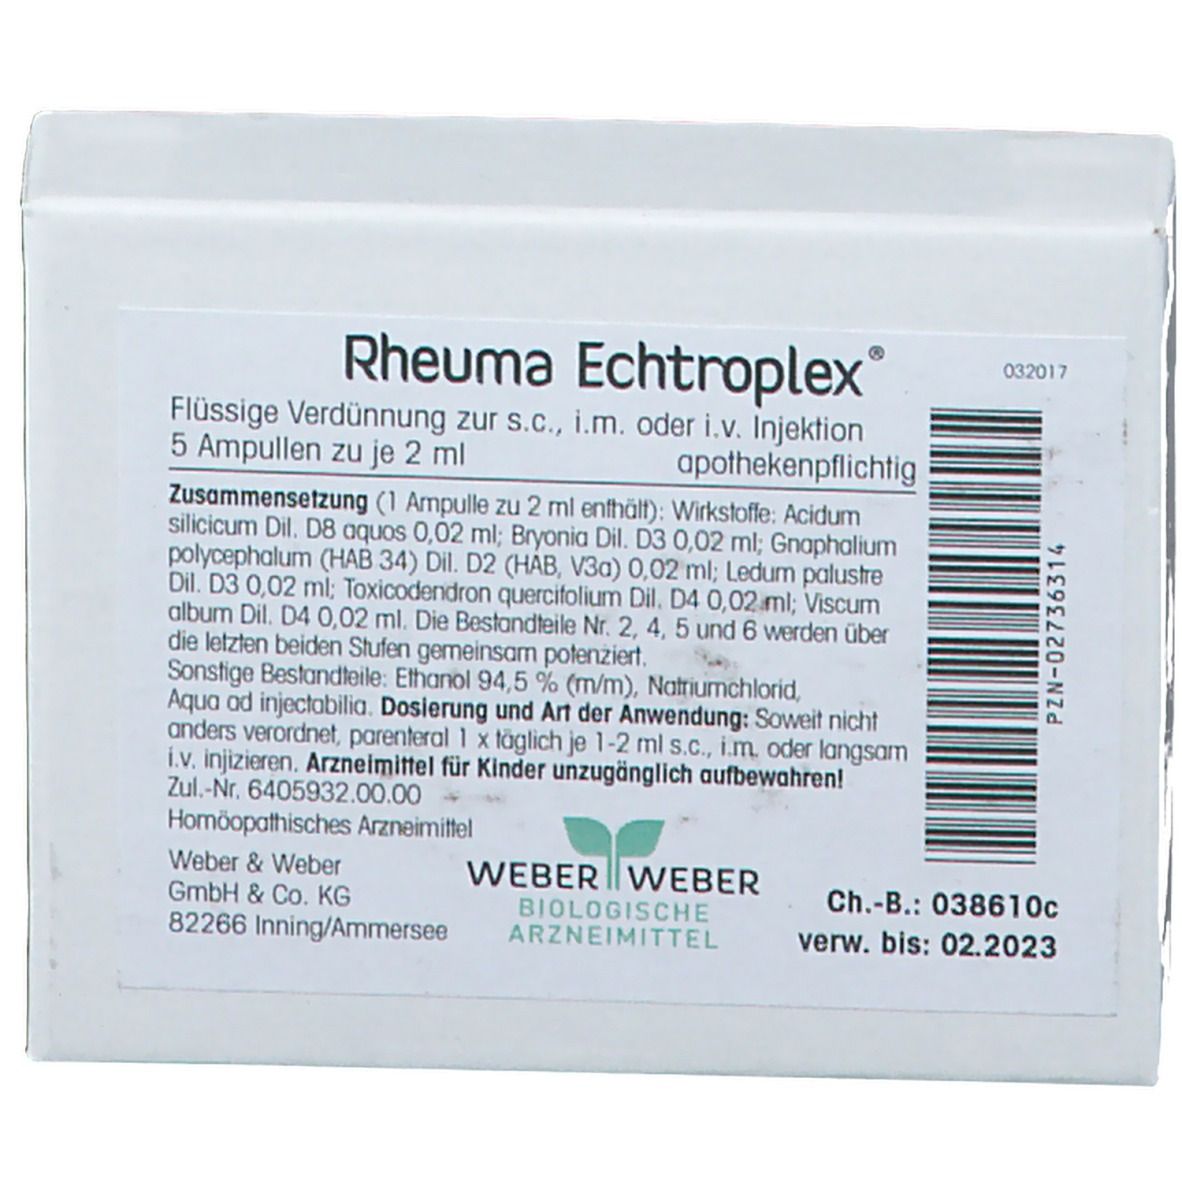 Rheuma Echtroplex® Injektionslösung